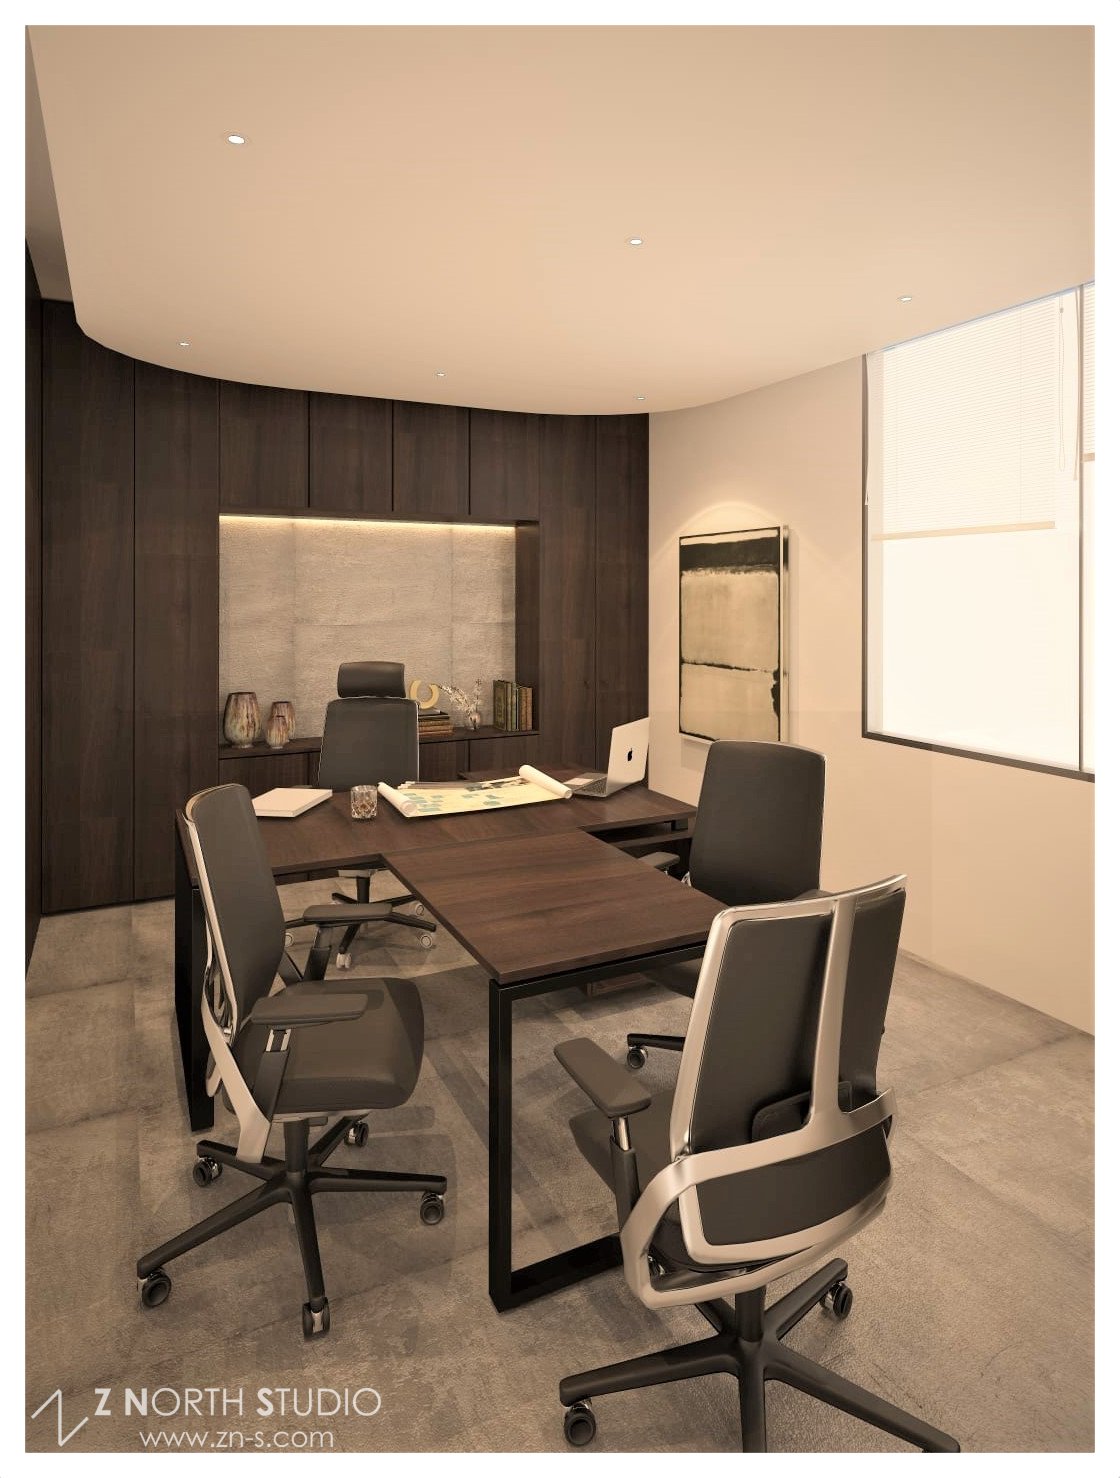 Interior Design - Z North Studio - Java Tax - Office - zn-s (3).jpg